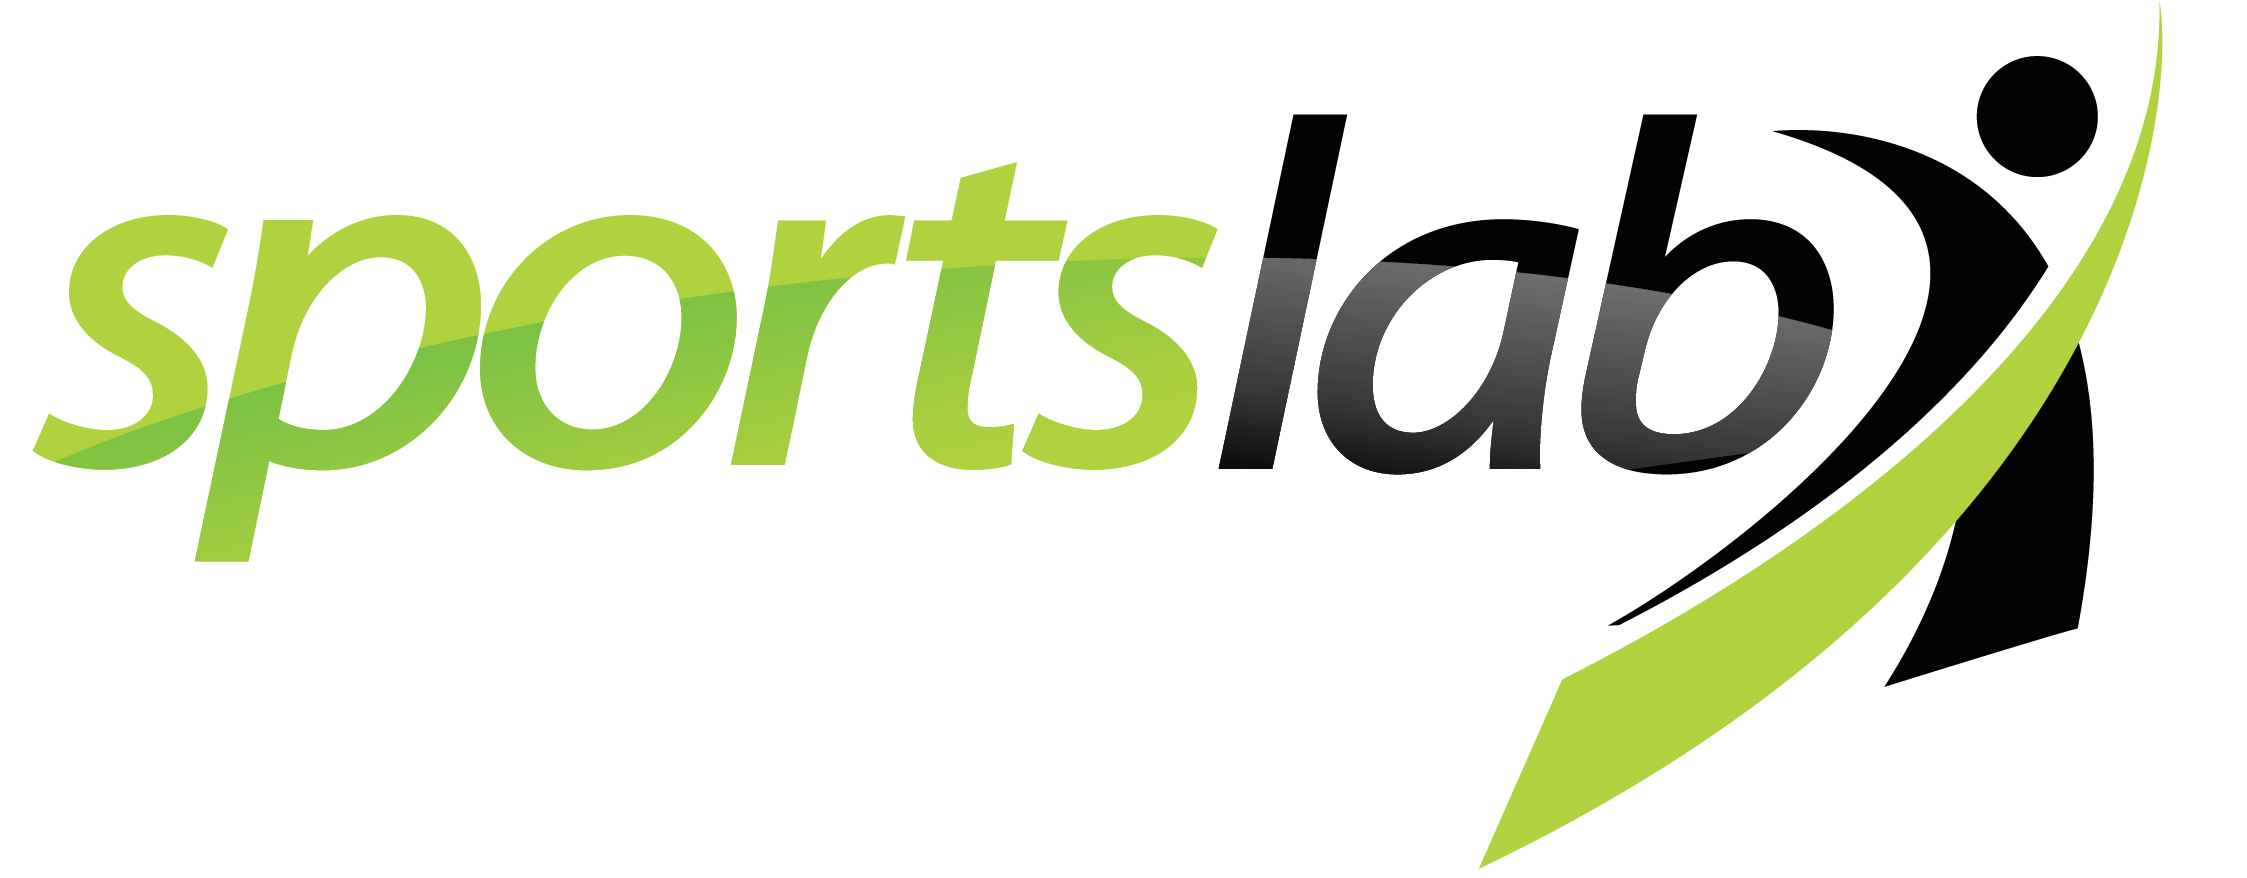 Sports-Lab-CMYK-no-tagline-01-1.png